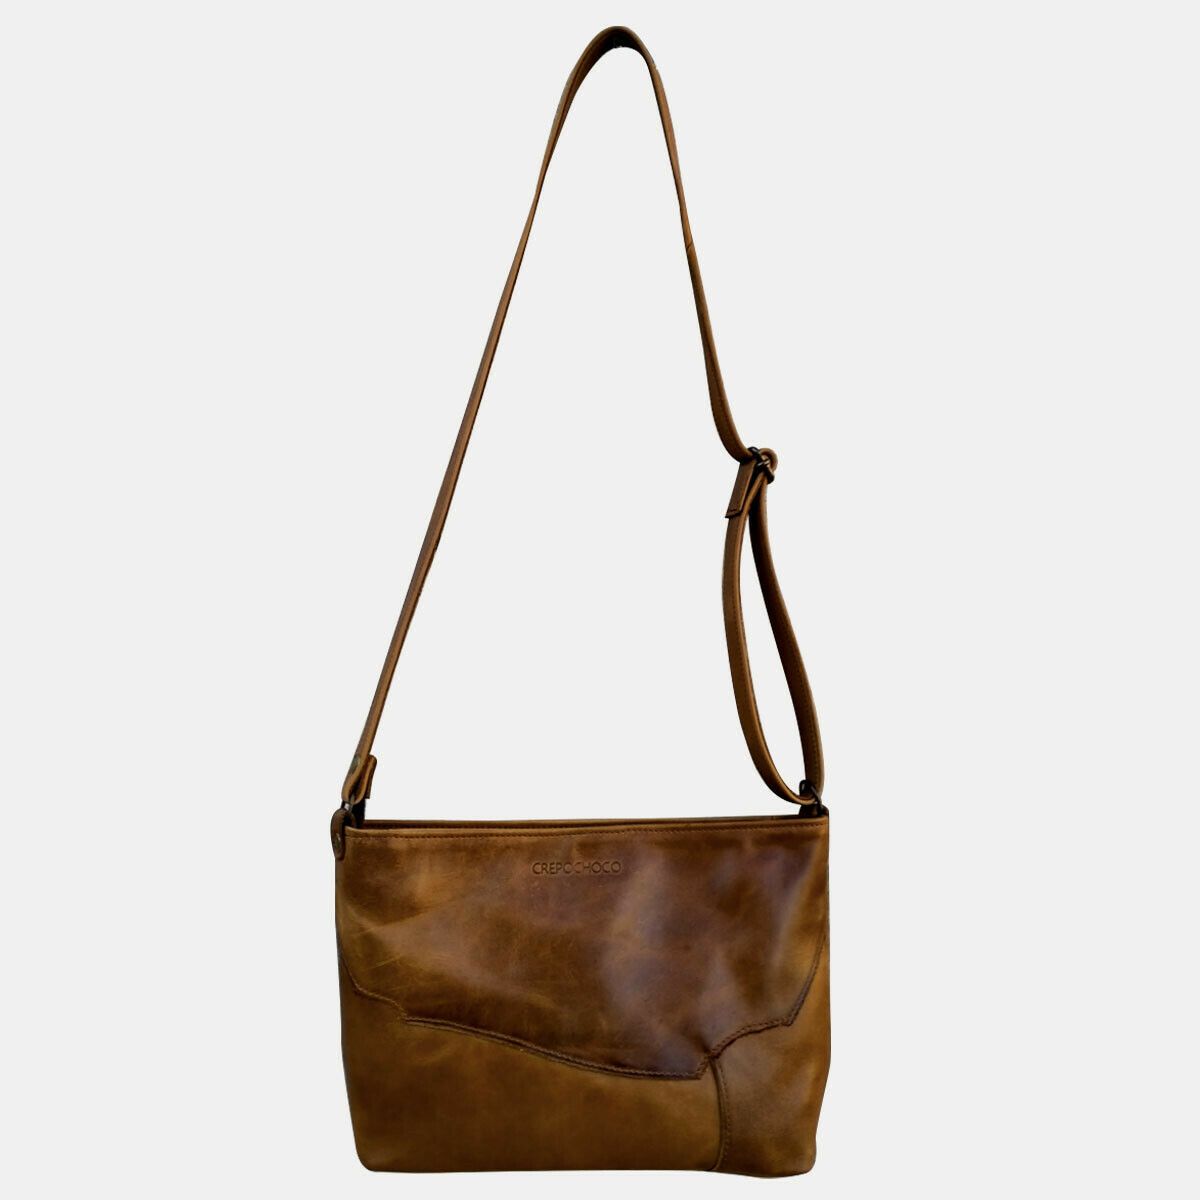 Grand sac à main femme cuir vieilli naturel Elsa/Collection Esprit Cuir